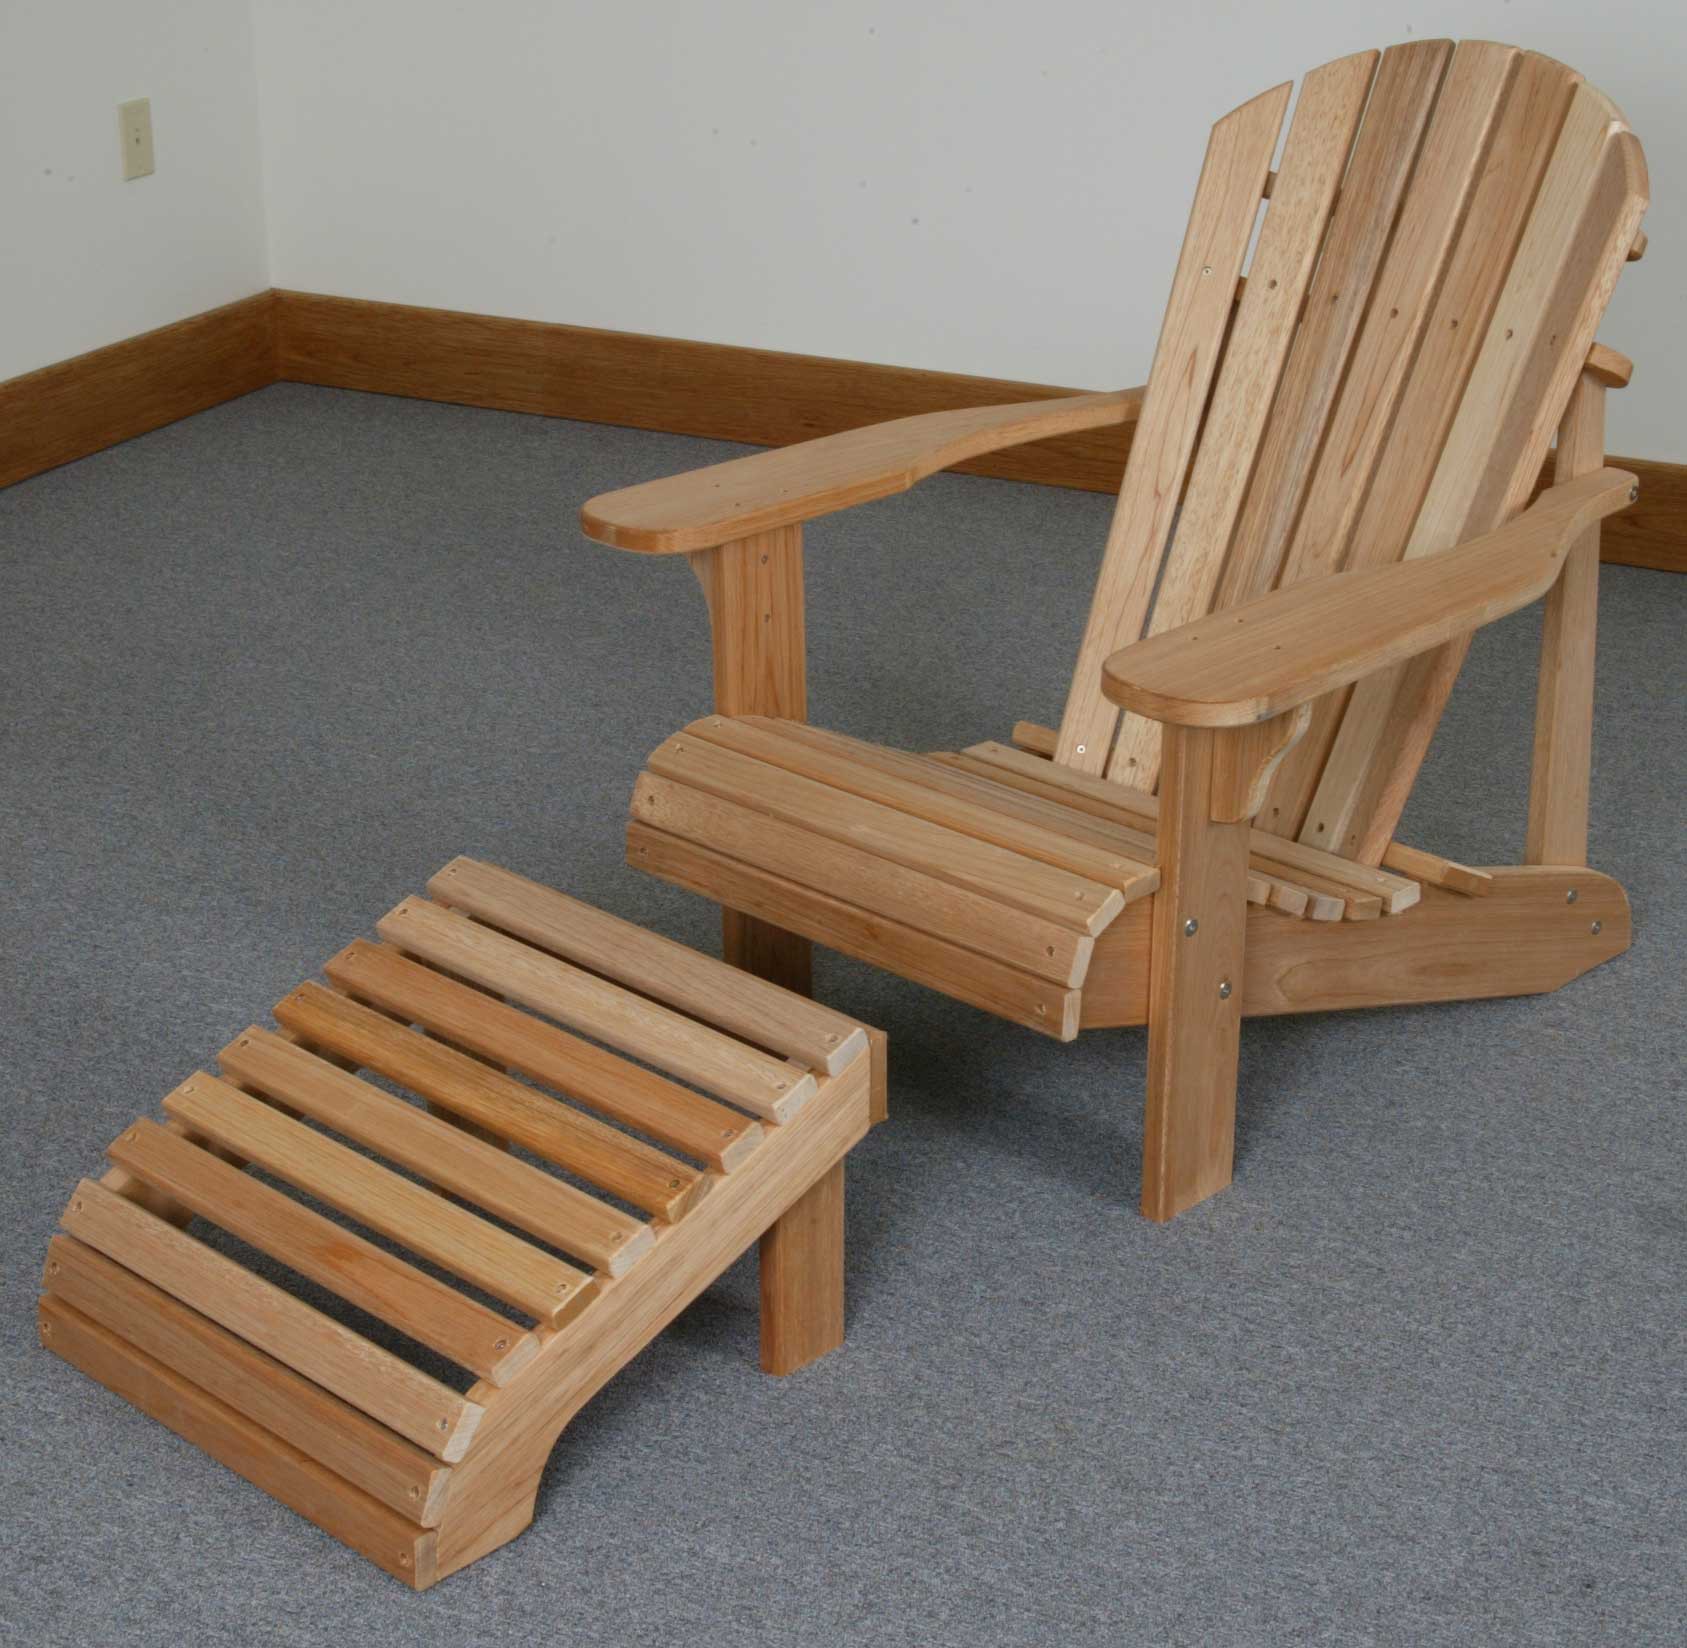 Poly Lumber Folding Adirondack Chair with Ottoman